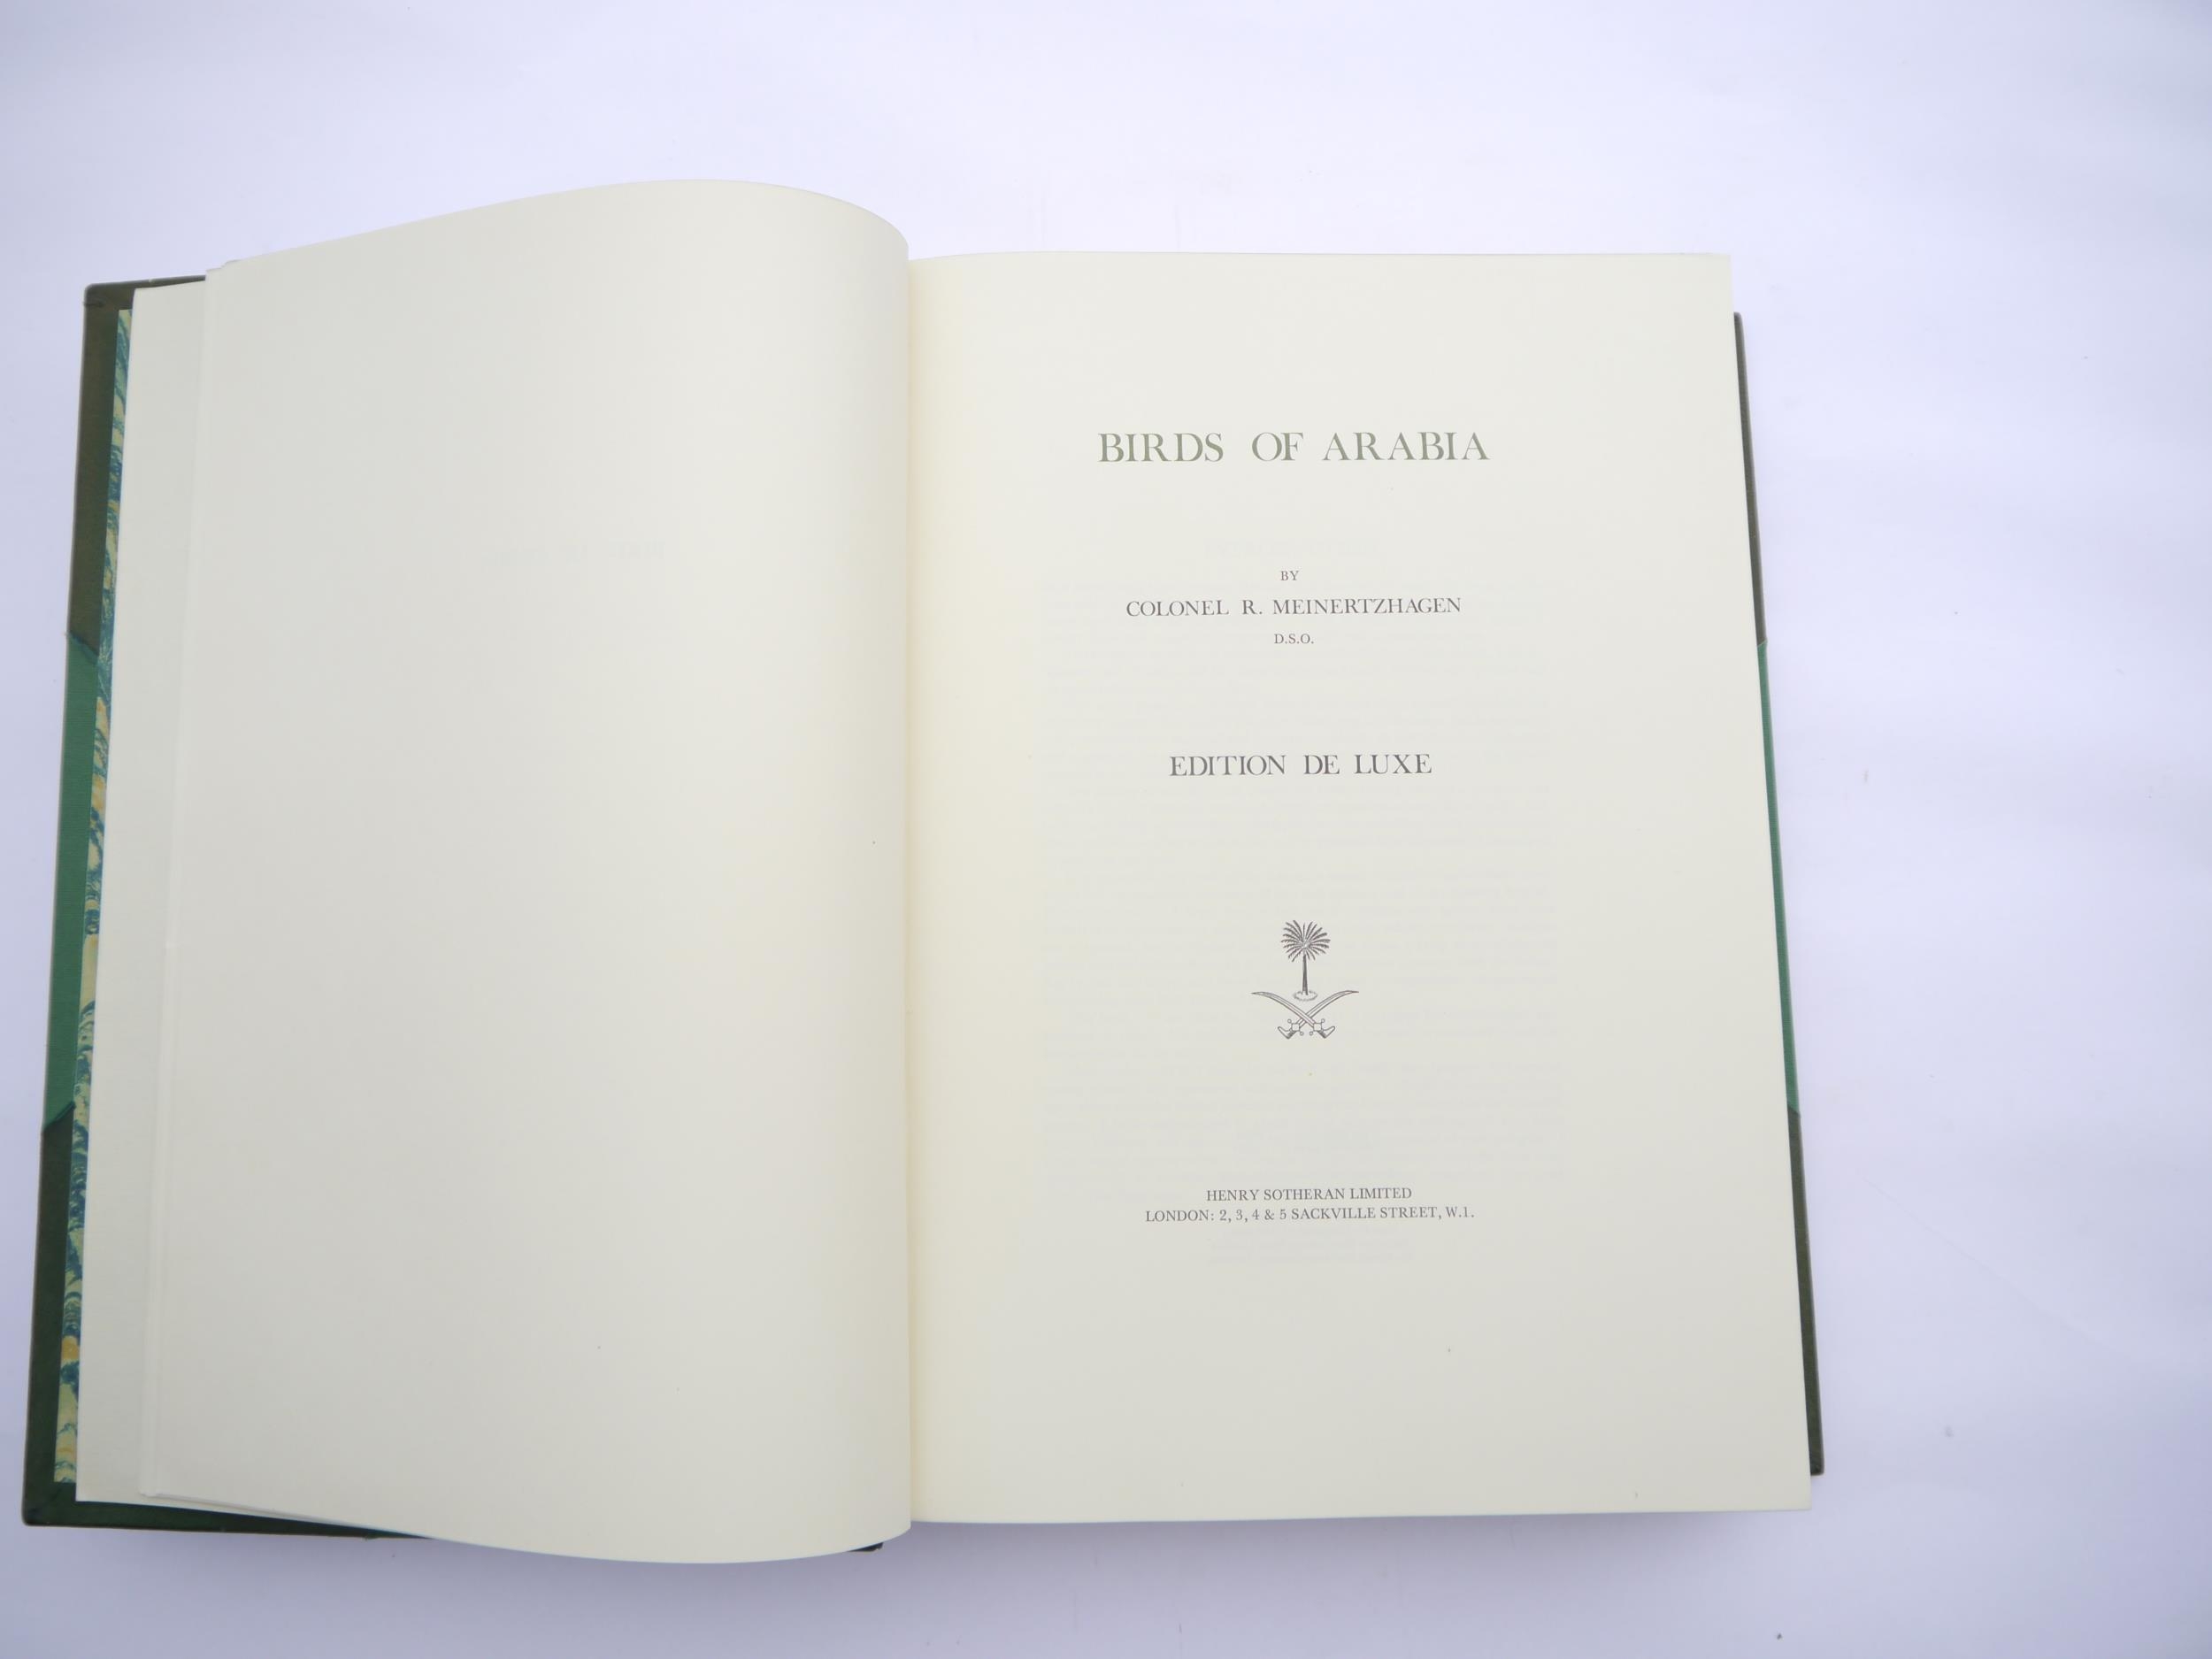 Colonel R. Meinertzhagen: 'Birds of Arabia', London, Henry Sotheran, 1980, edition de Luxe, one of - Bild 4 aus 7